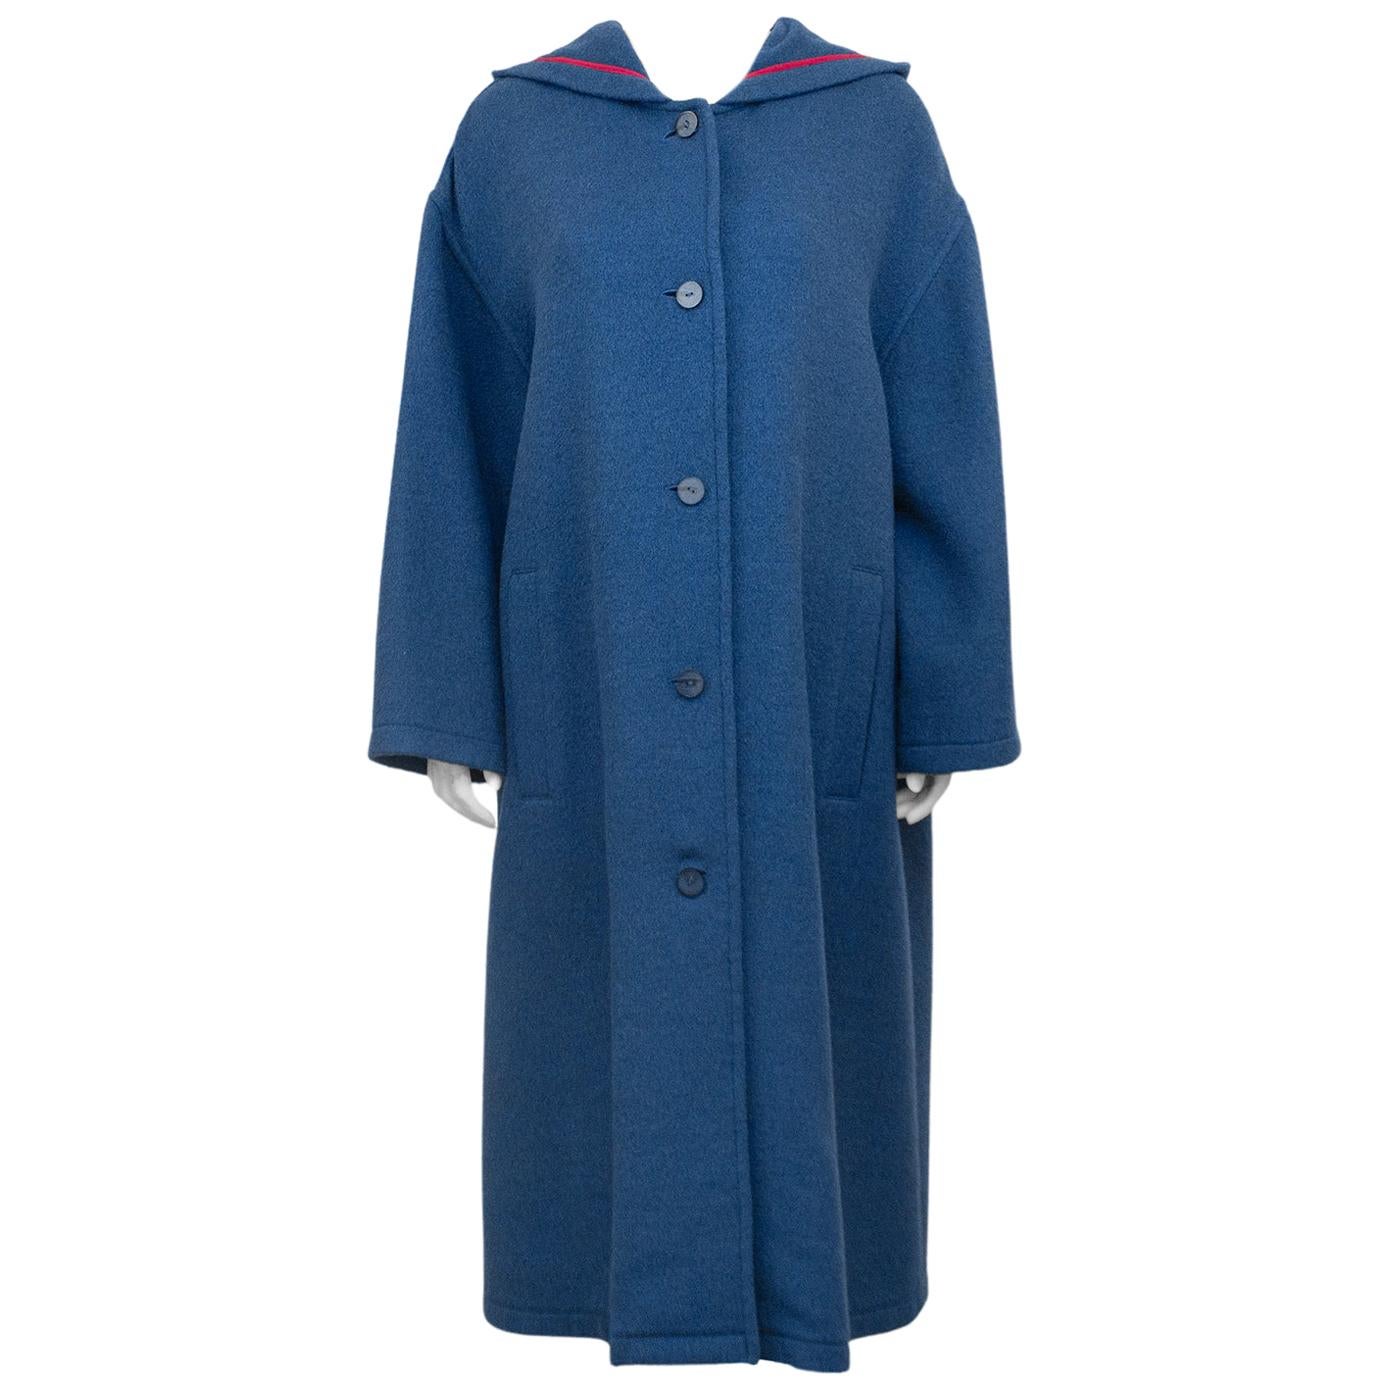 1980s Geoffrey Beene Teal Blue, Rose Trimmed Wool Coat with Hood 